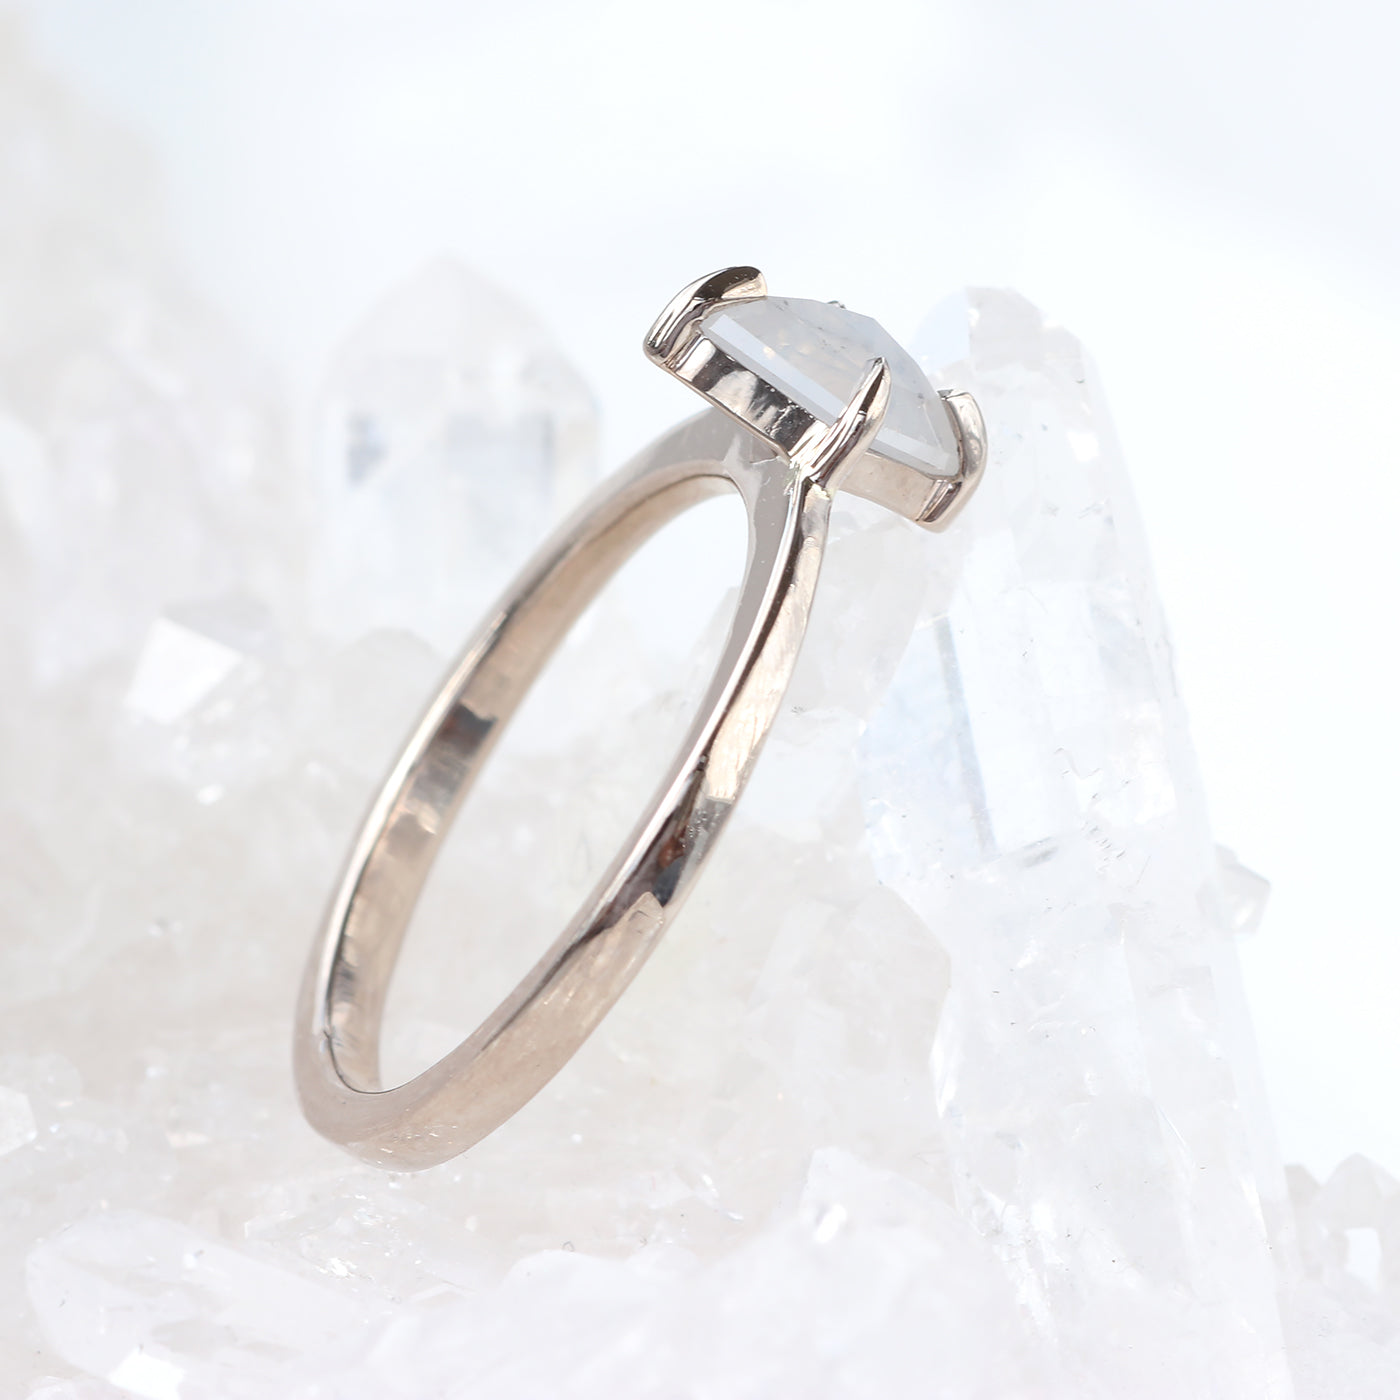 Kite shape diamond engagement ring in 18ct white gold